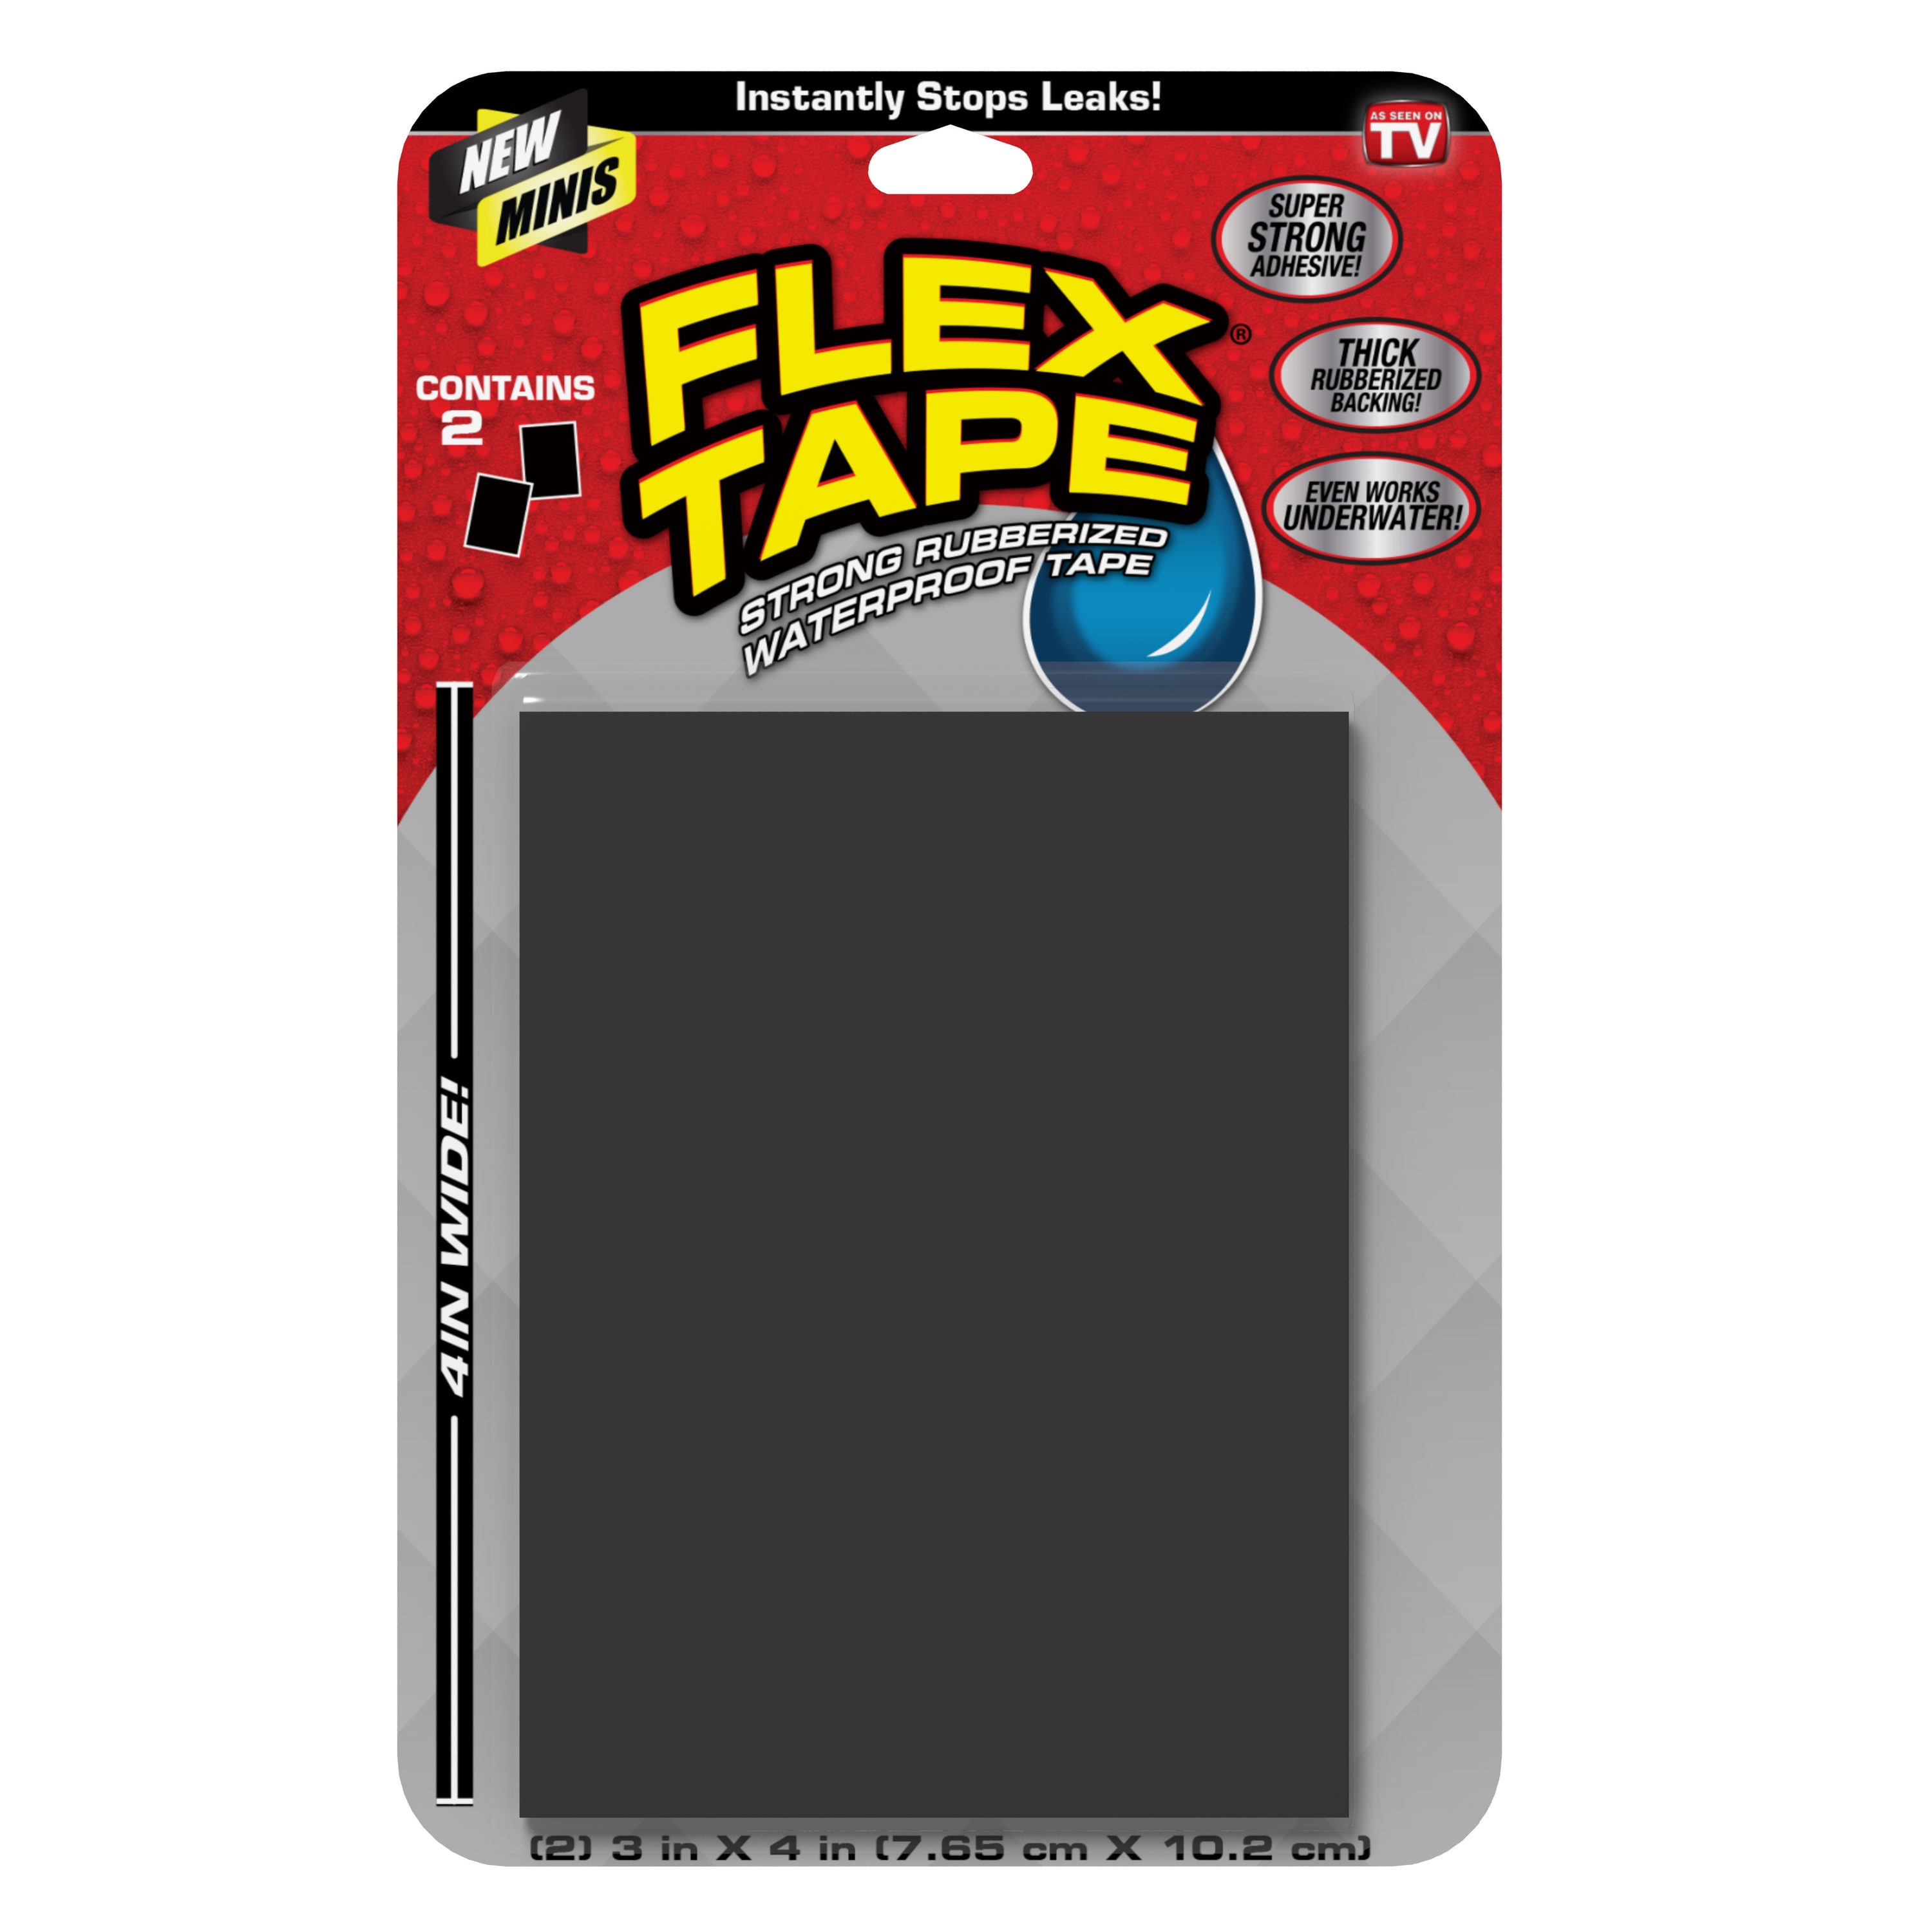 Flex Tape Flood Protection, 3.75 x 20